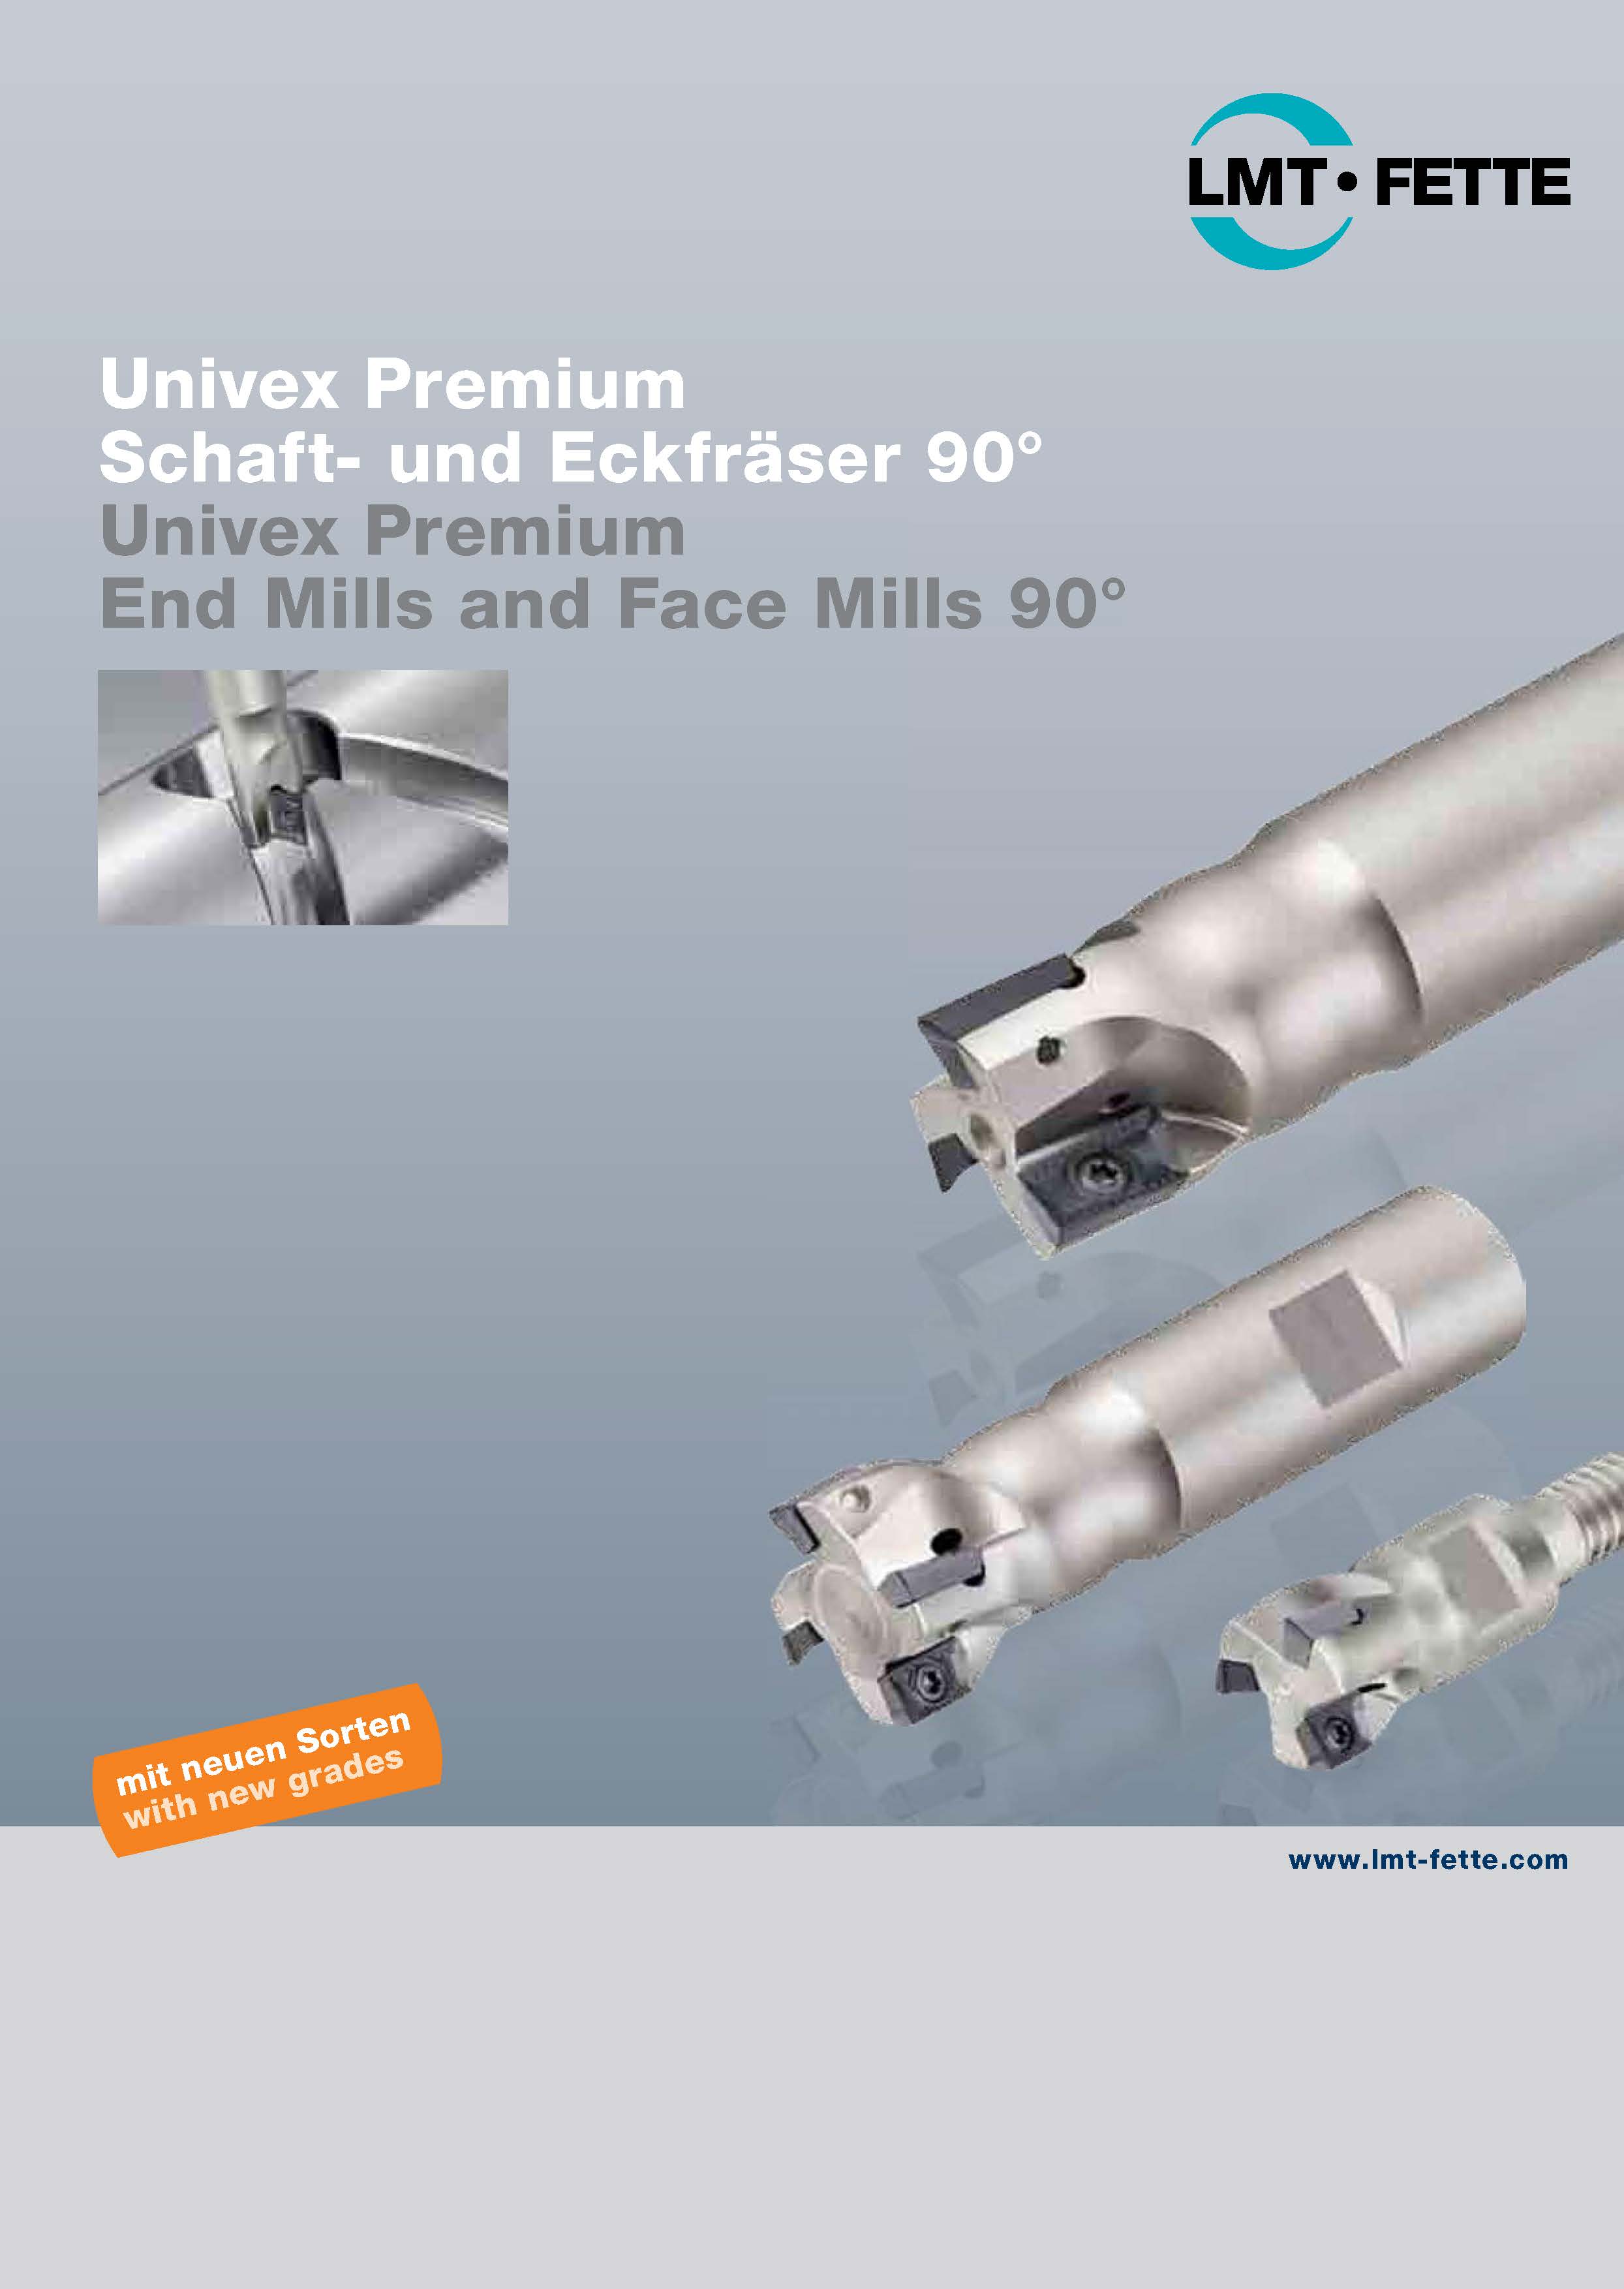 Univex Premium - End Mills and Face Mills 90°